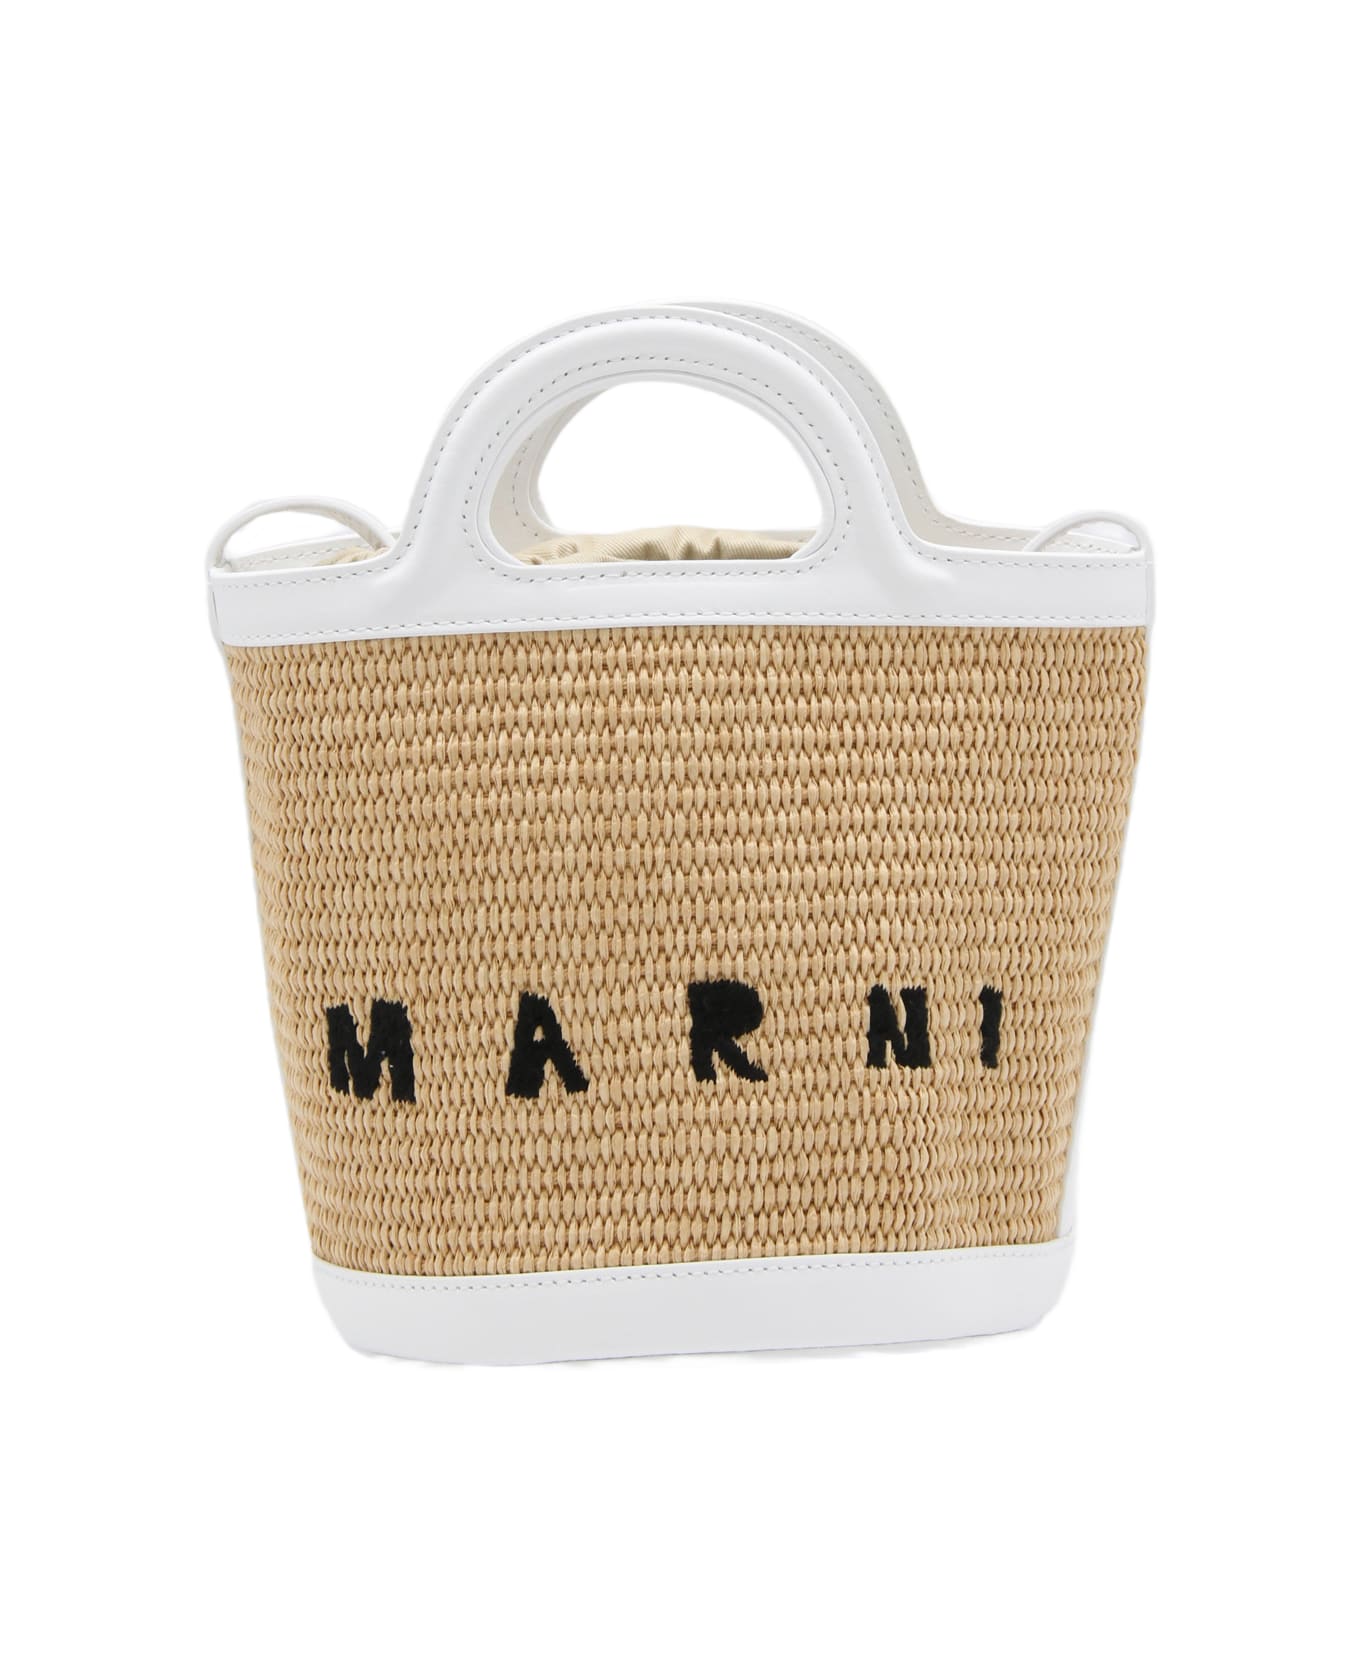 Marni White Leather And Beige Raffia Tropicalia Handle Bag - SAND STORM/LILLY WHITE